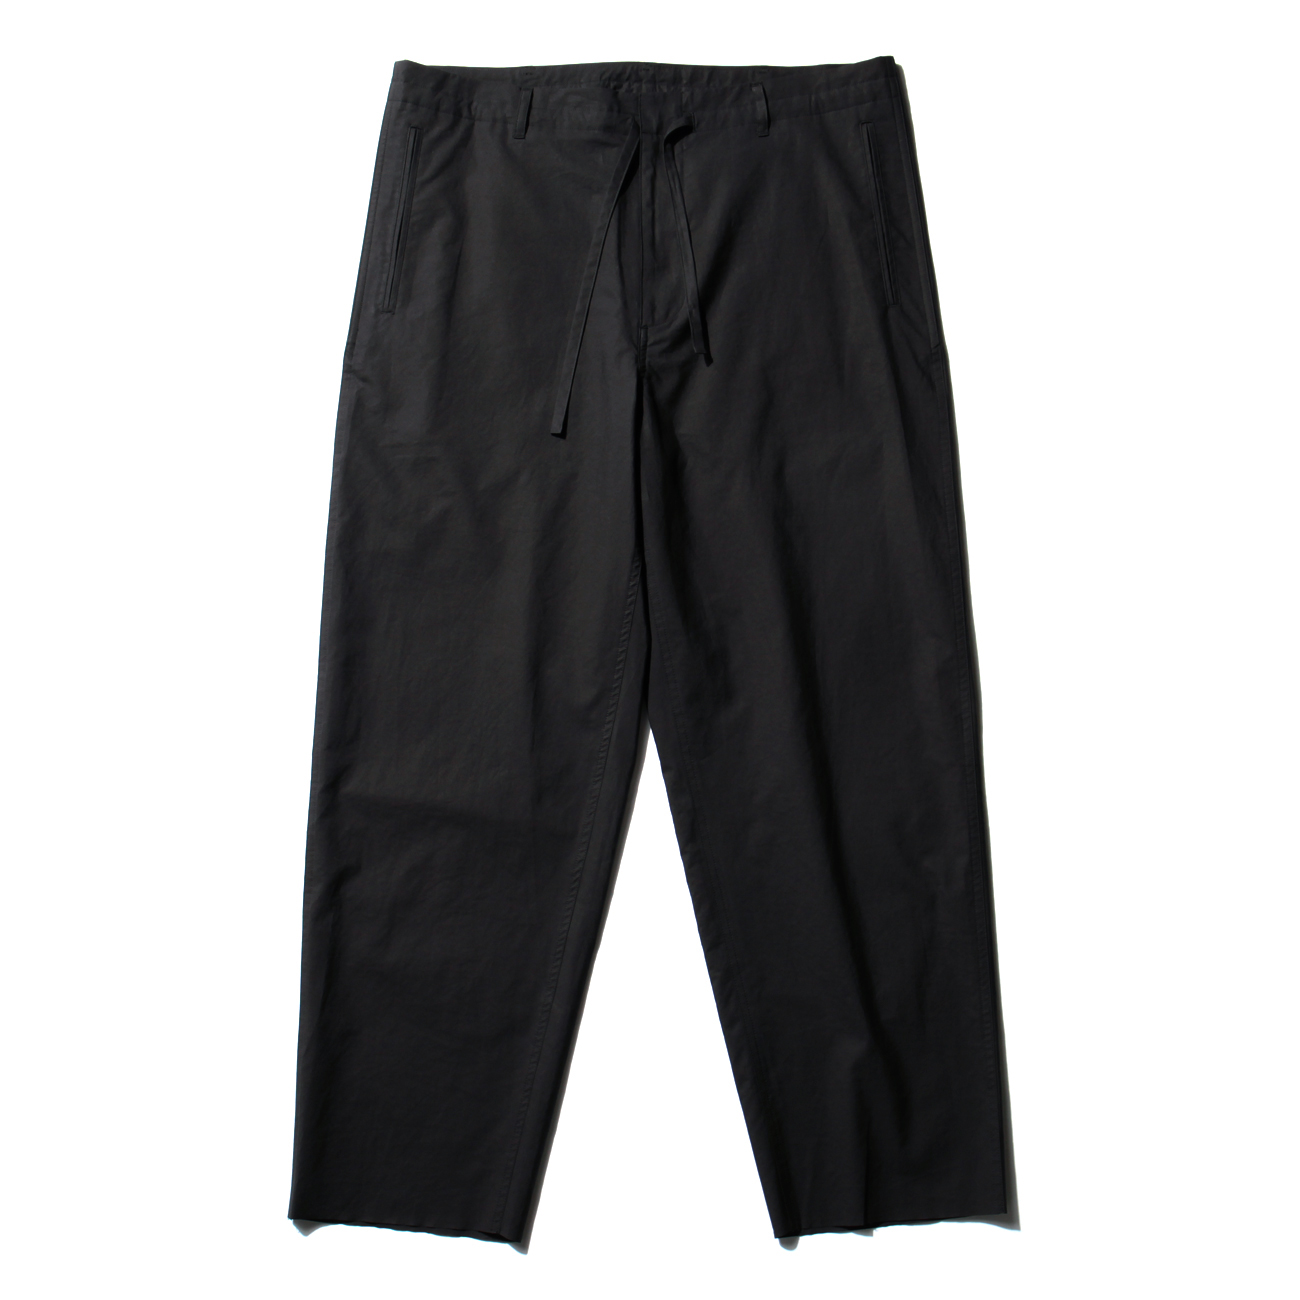 SELVEDGE WEATHER CLOTH EASY PANTS (メンズ) - Ink Black